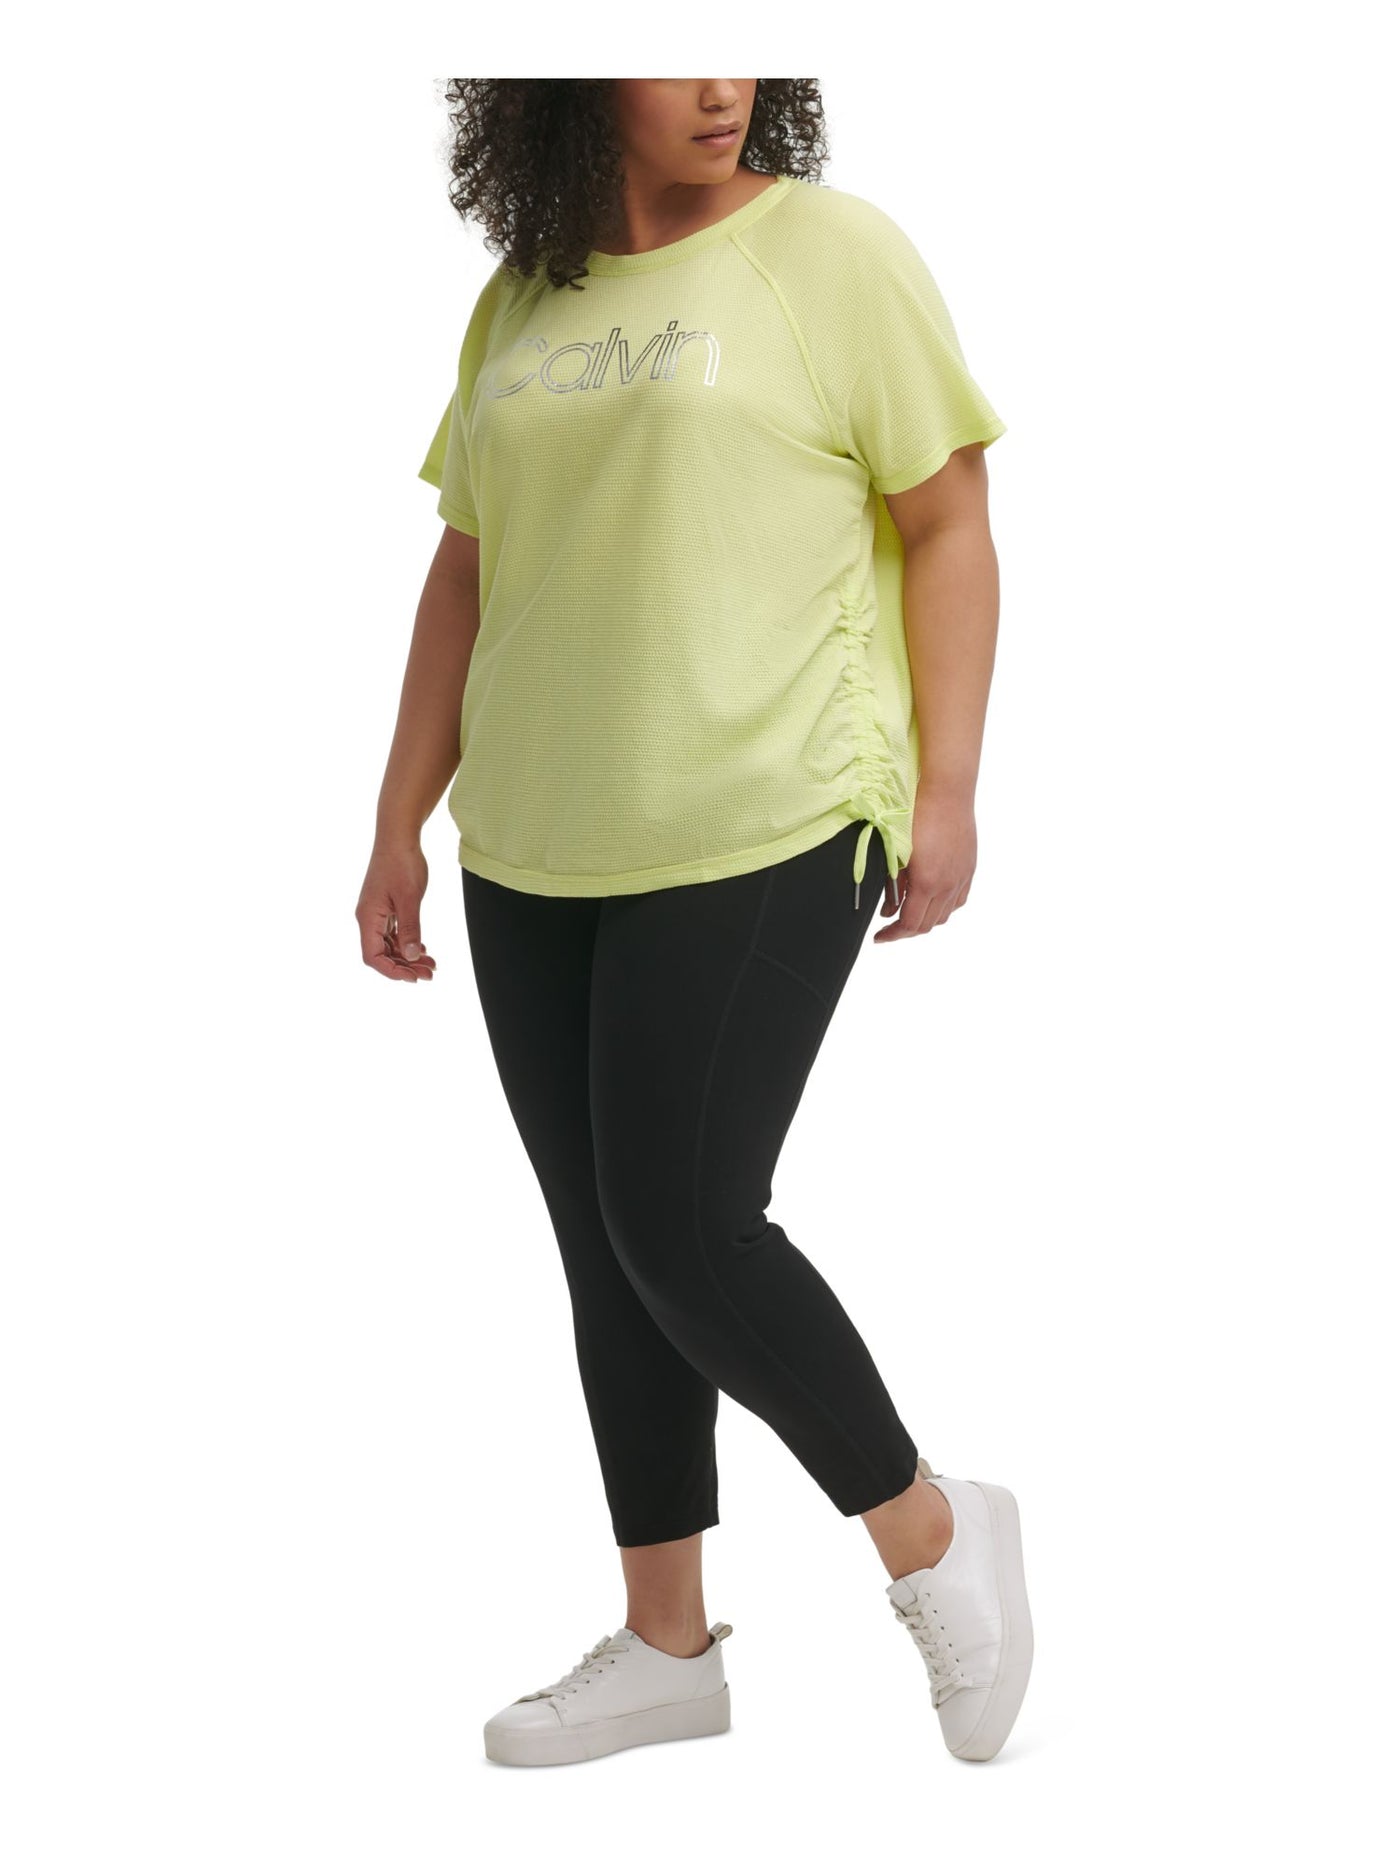 CALVIN KLEIN PERFORMANCE Womens Green Cotton Blend Textured Logo Graphic Short Sleeve Crew Neck Top Plus 1X